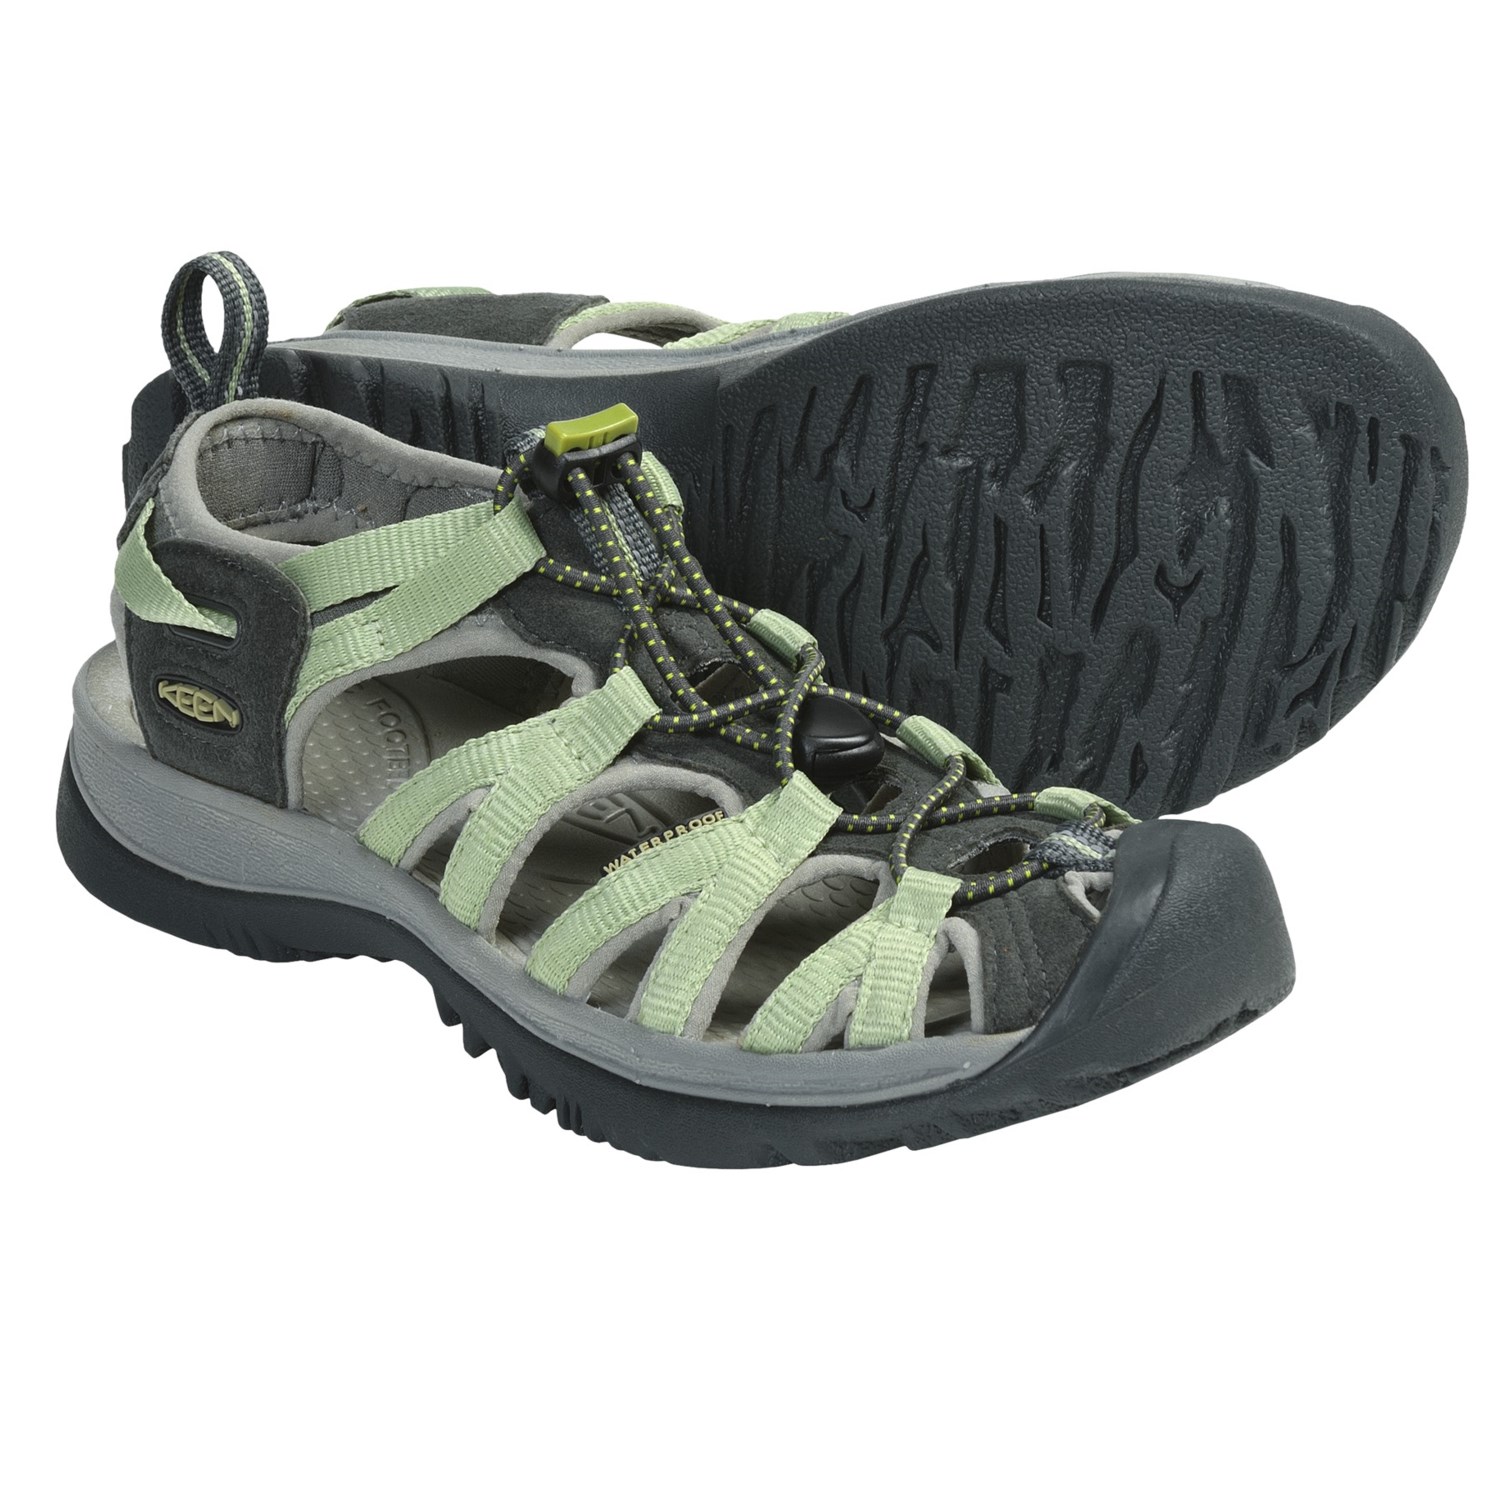 Keen Whisper Sport Sandals (For Women) in NileNeutral Grey